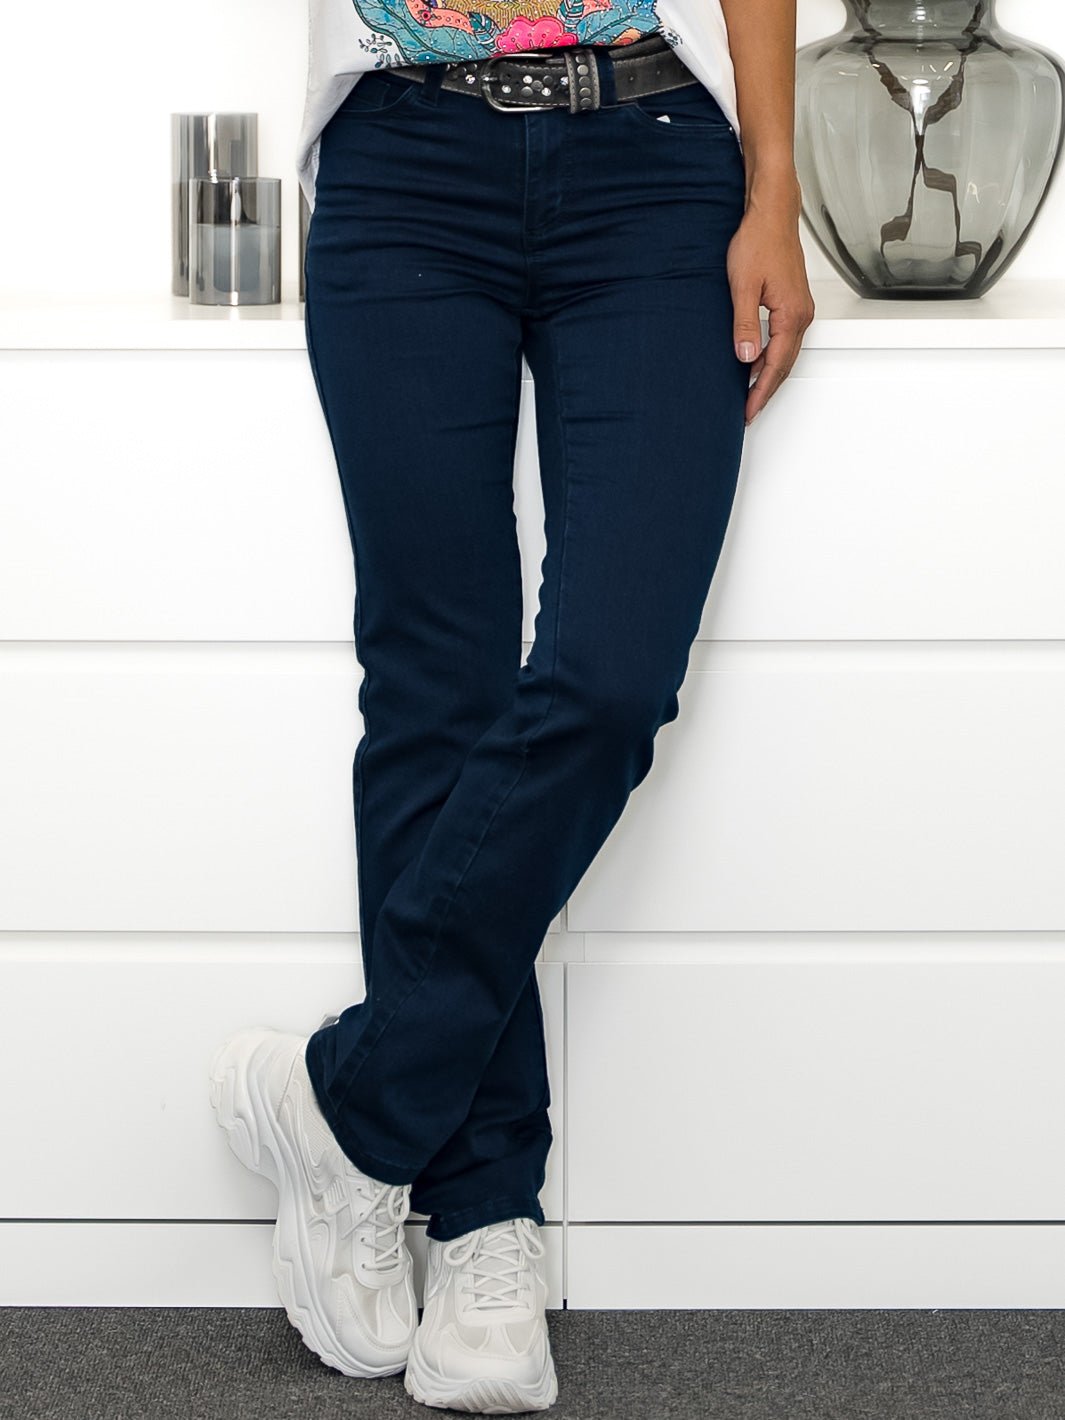 Kaffe KAvicky straight jeans I dark blue denim - Online-Mode